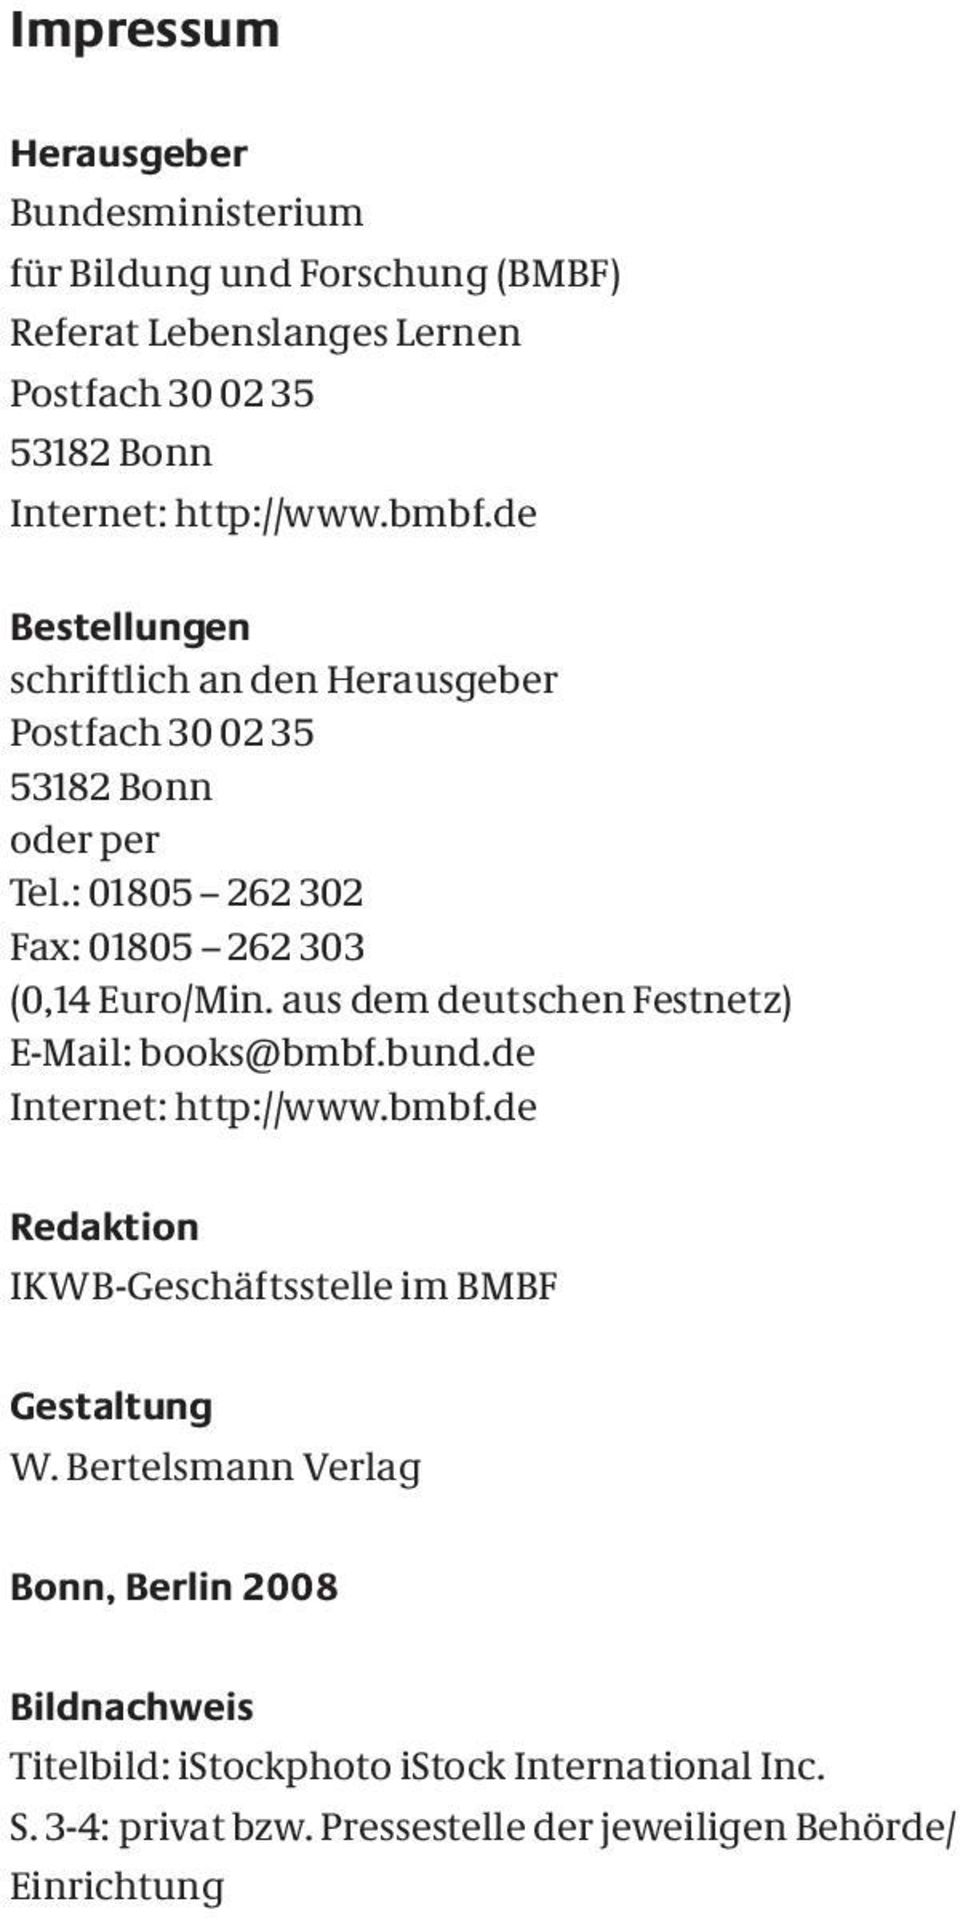 : 01805 262 302 Fax: 01805 262 303 (0,14 Euro/Min. aus dem deutschen Festnetz) E-Mail: books@bmbf.